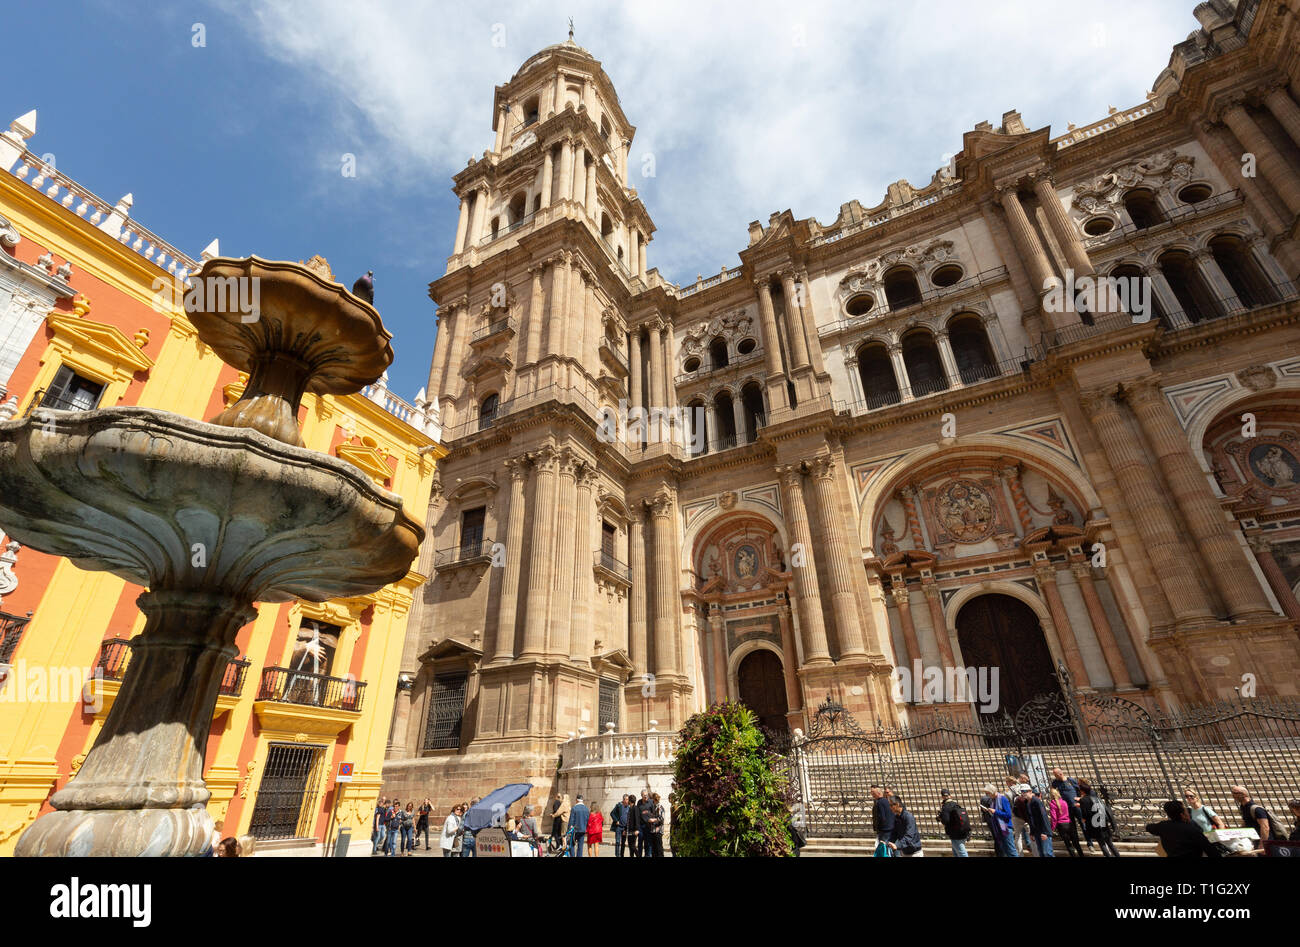 Malaga Cathedral and the Bishops Palace, Plaza del Obispo, Malaga old town, Malaga, Andalusia, Spain Stock Photo